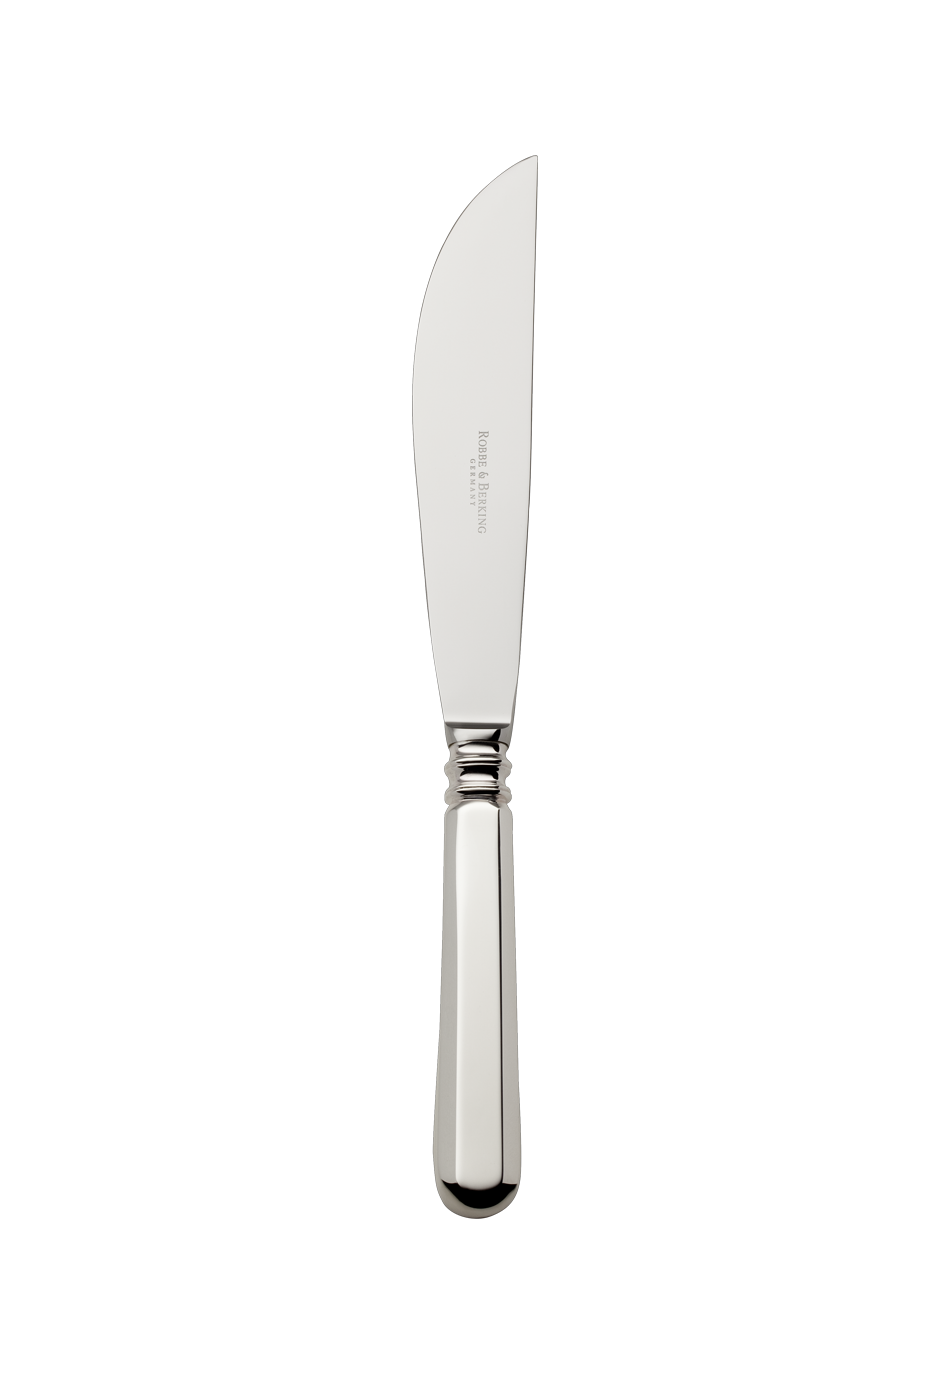 Alt-Spaten Carving Knife (150g massive silverplated)